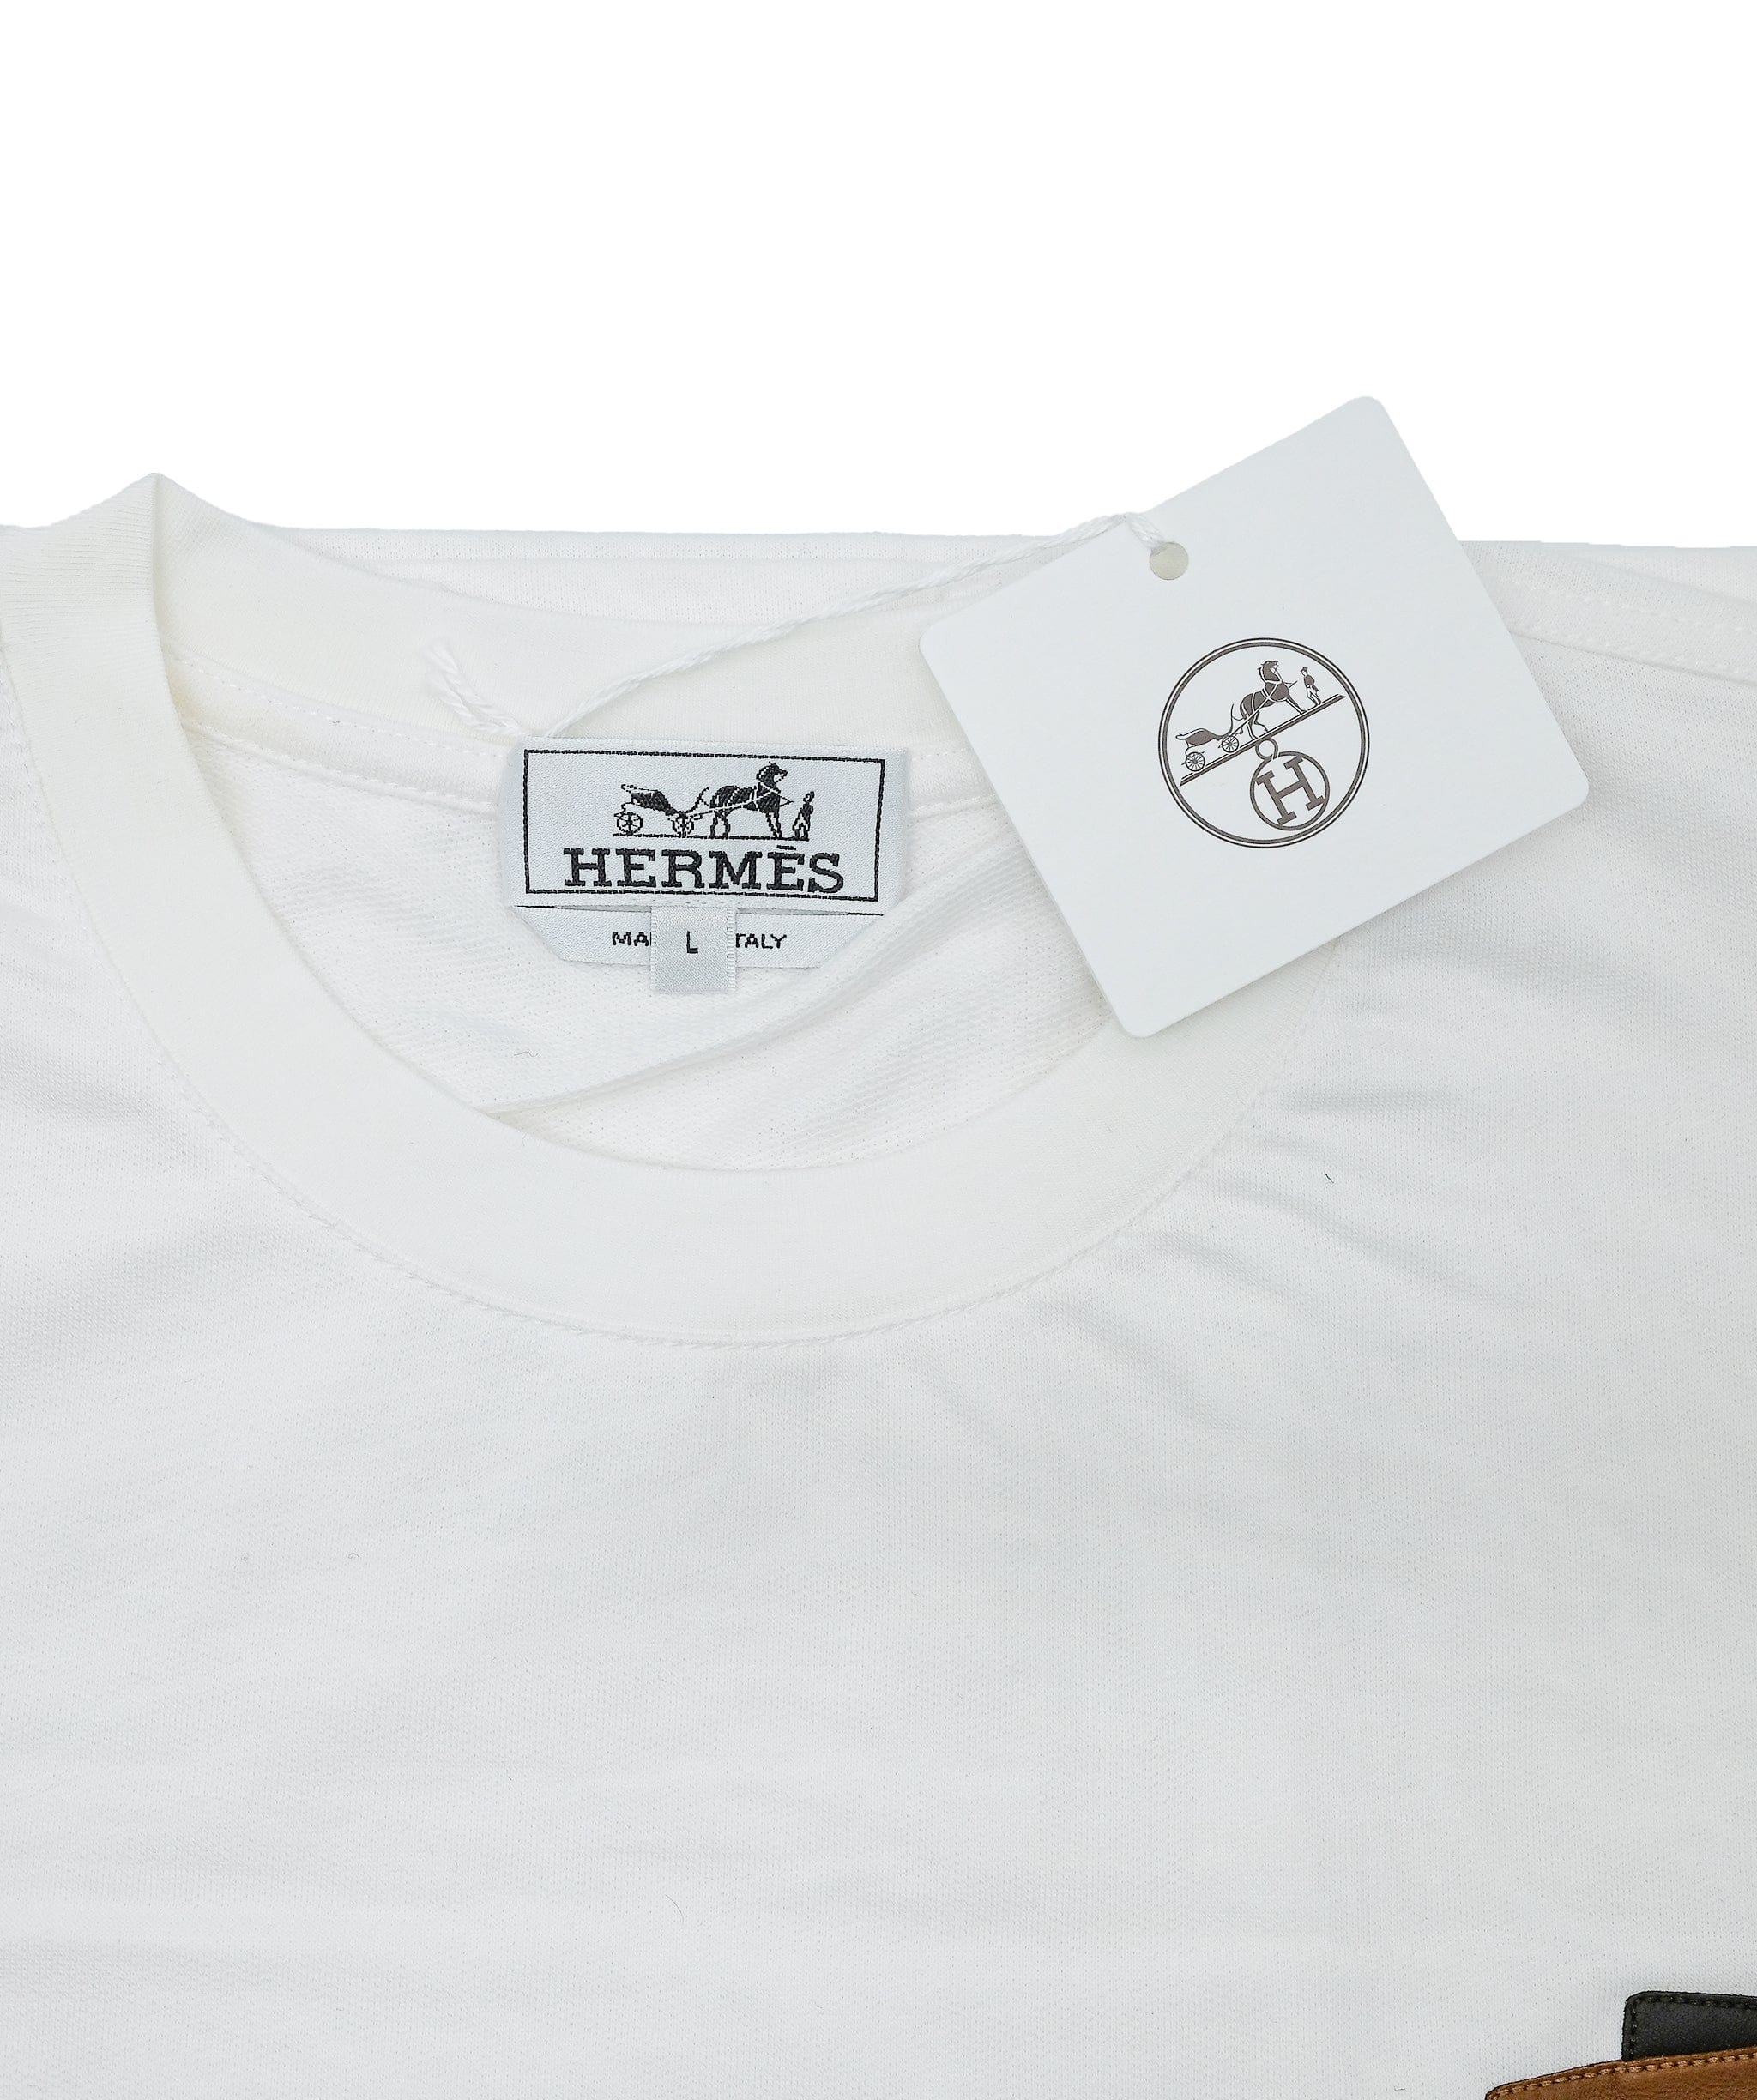 Hermès Hermes T-shirt White Large RJC3151